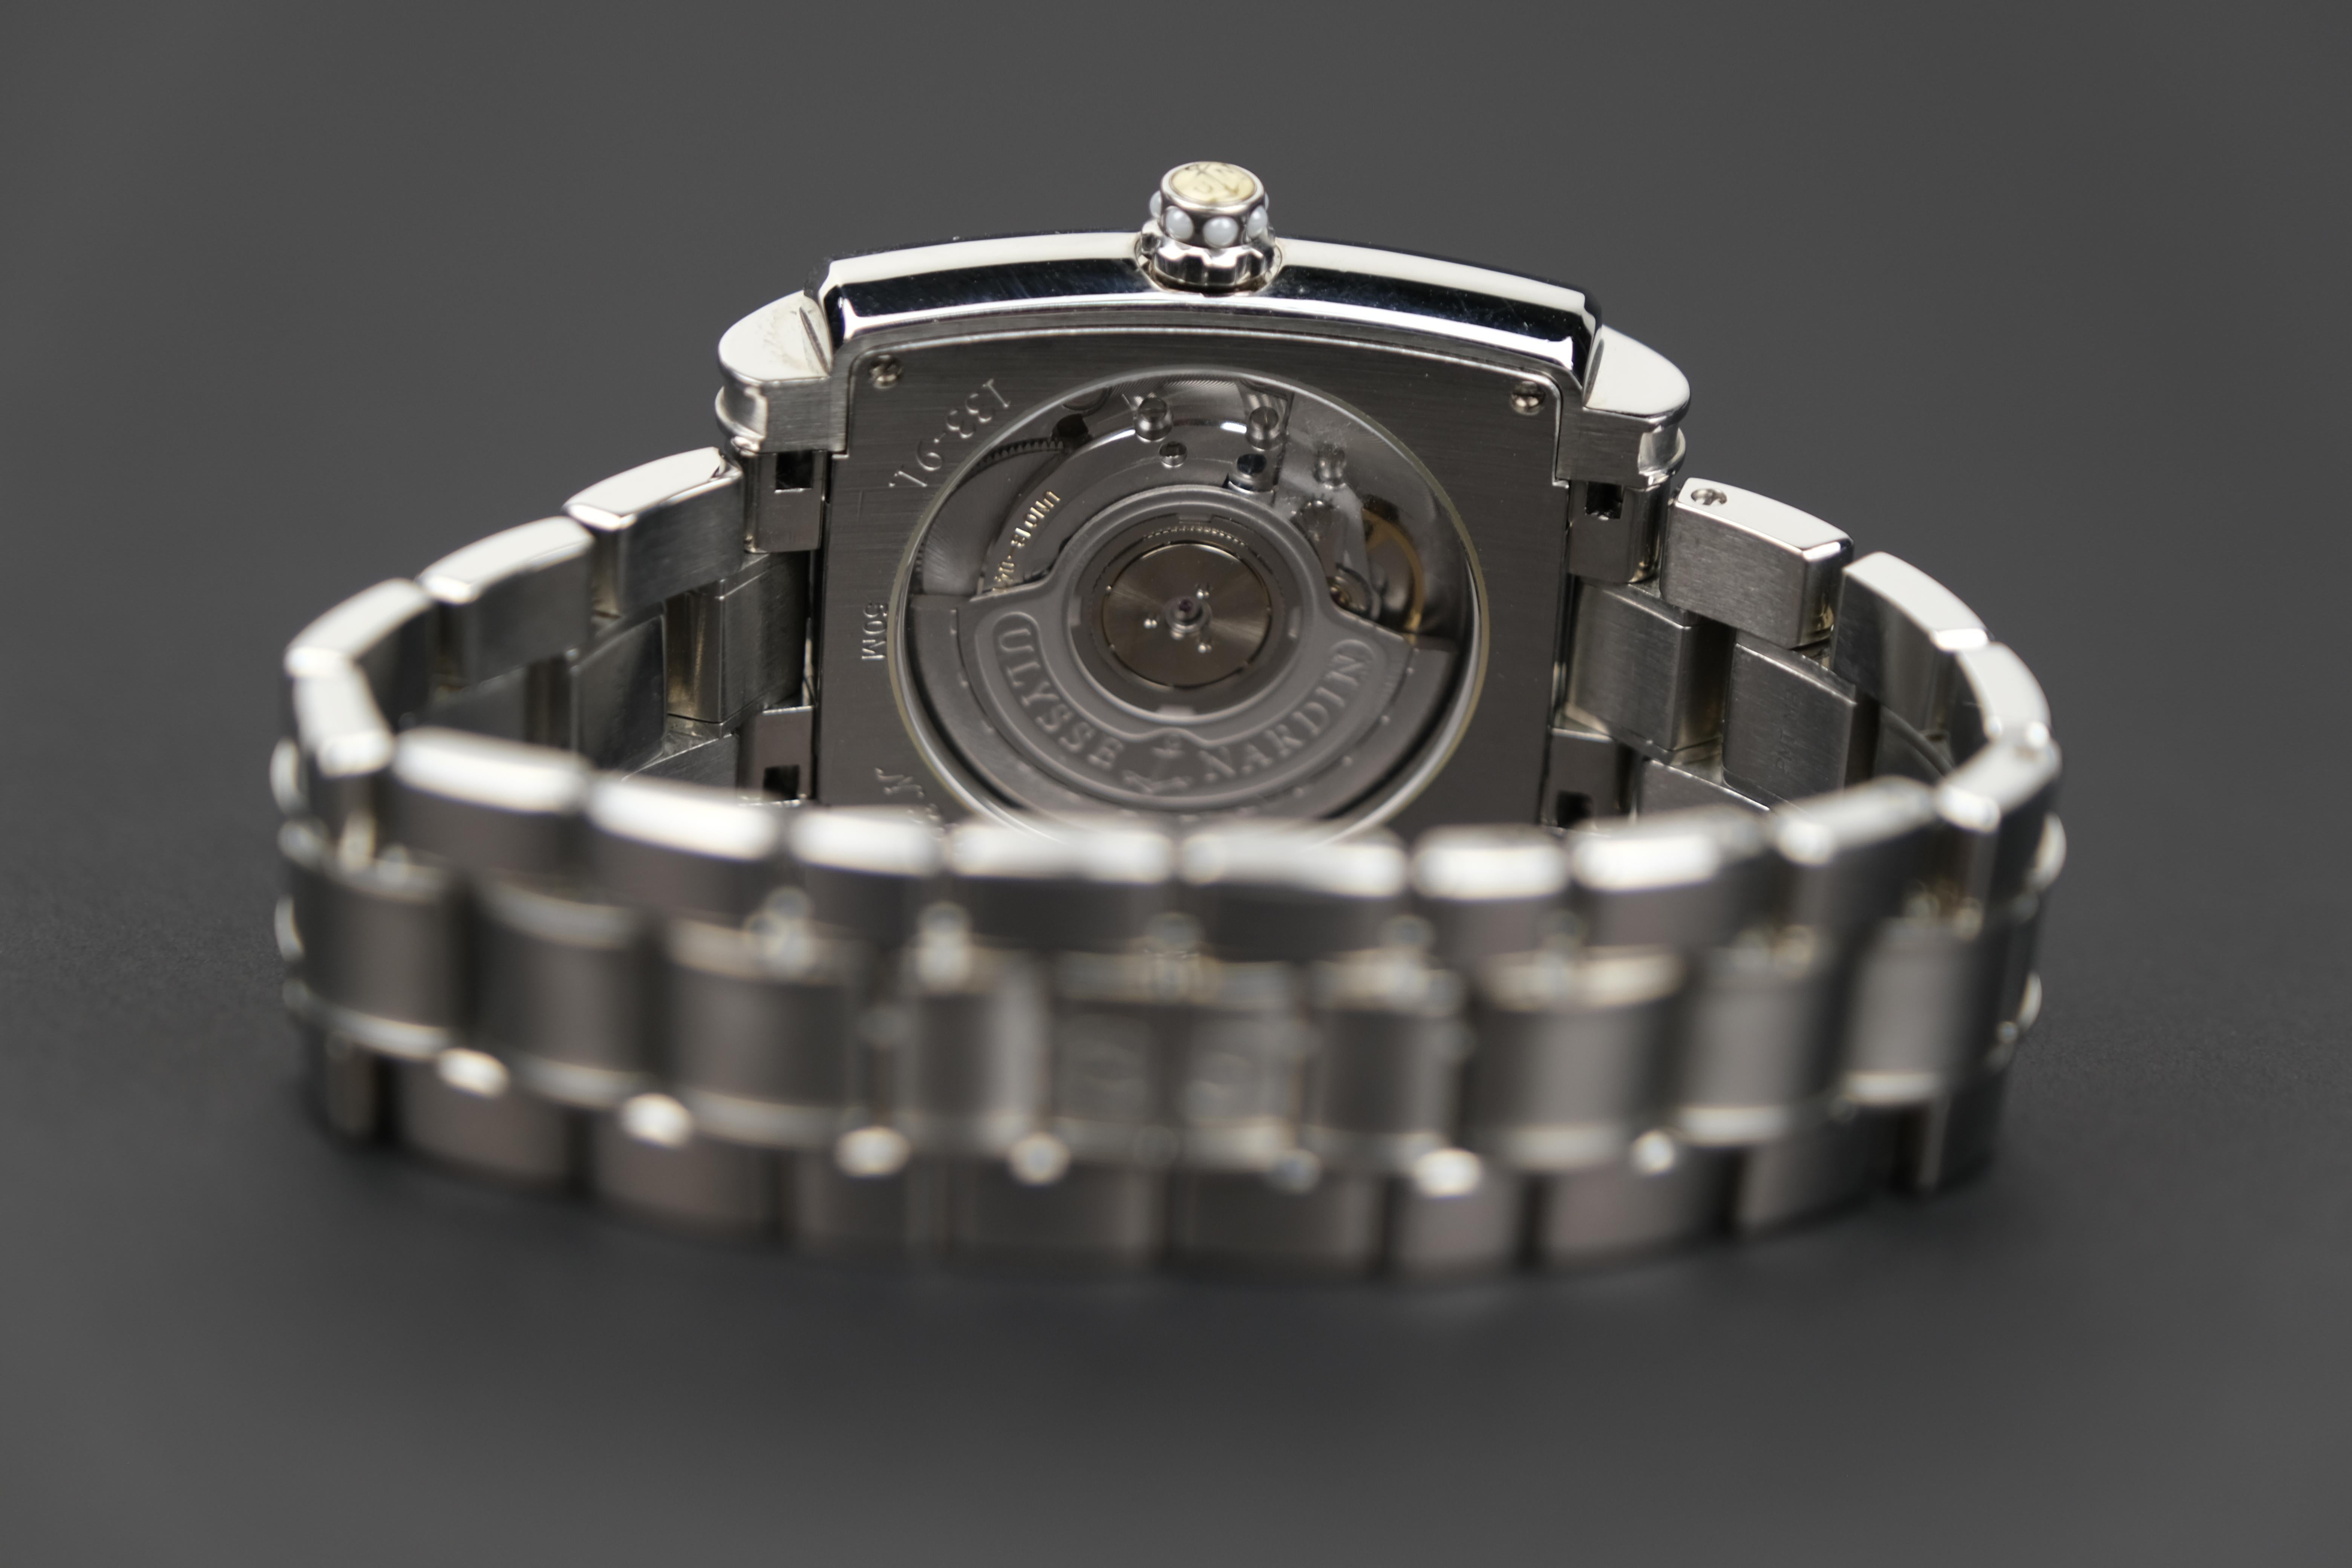 Ulysse Nardin Caprice Stainless Steel Diamond Watch #133-91/691 1